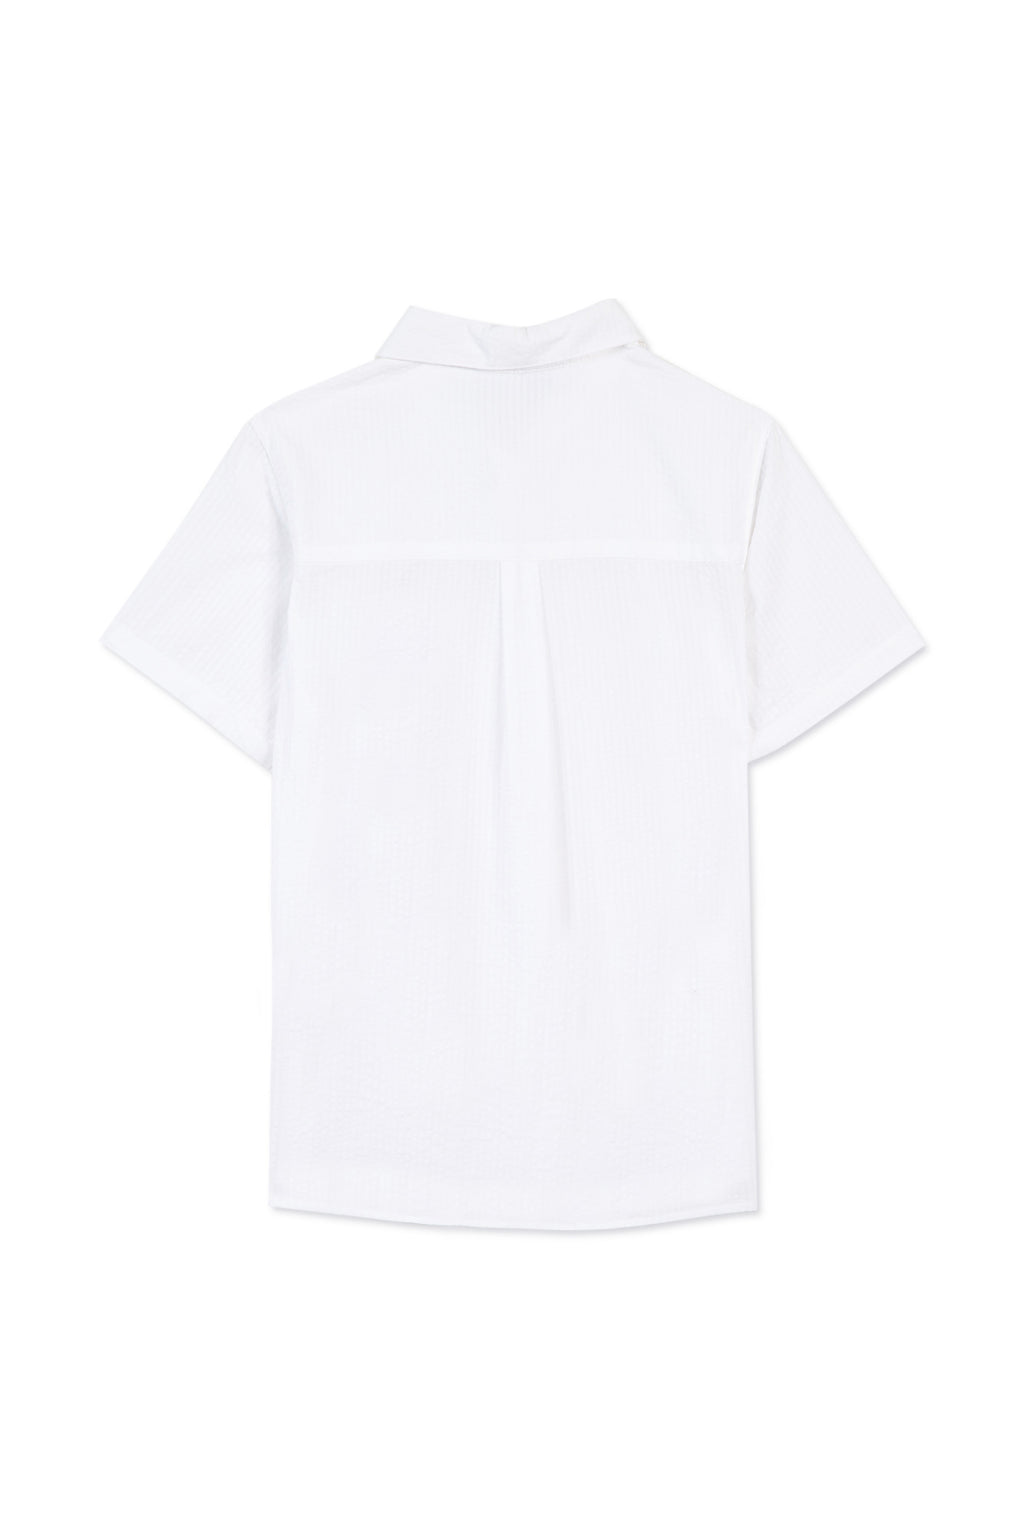 Shirt - White seersucker